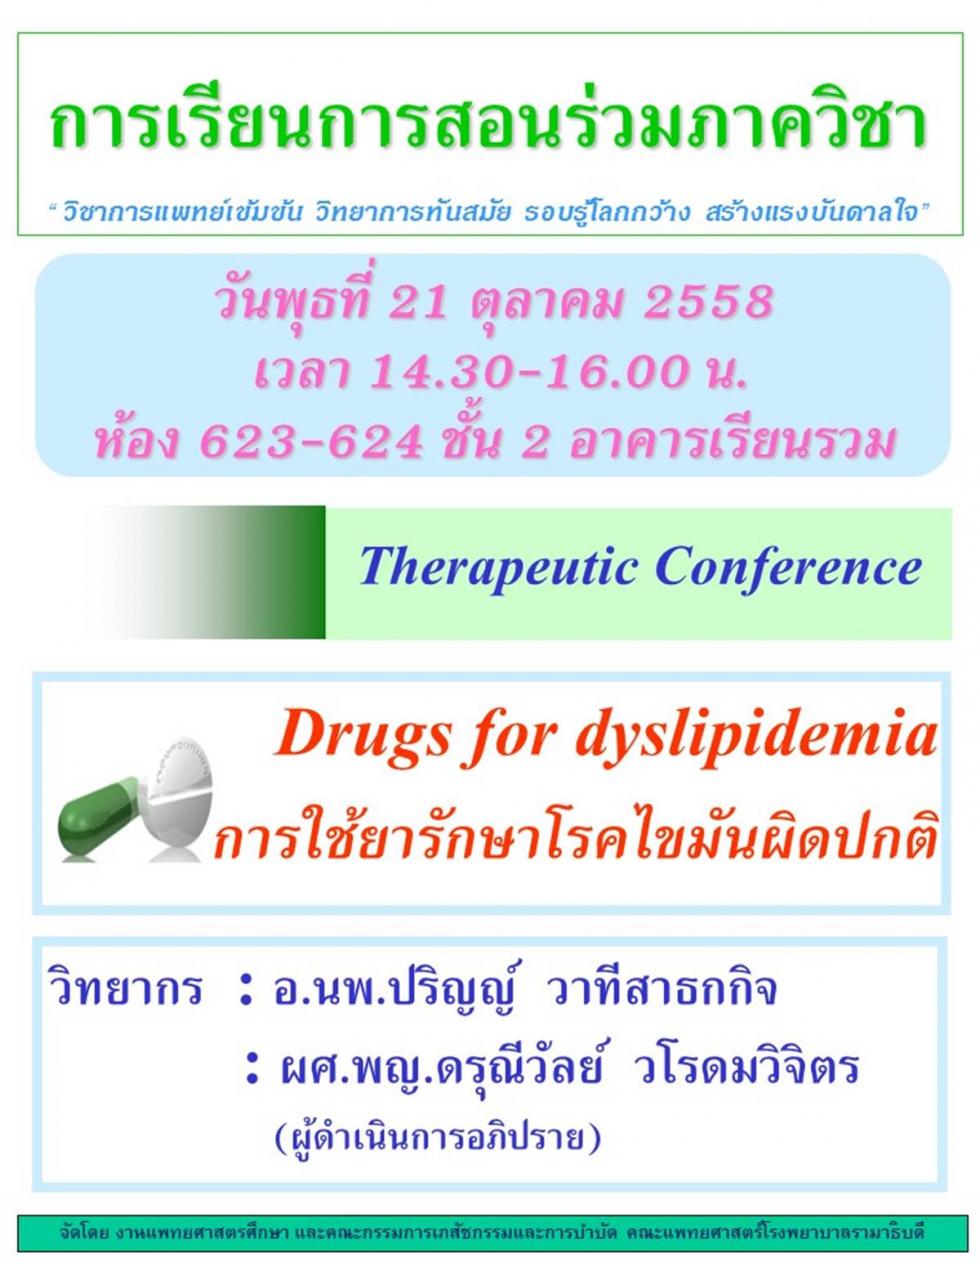 Therapeutic Conference "Drugs for dyslipidemia การใช้ยารักษาโรคไขมันผิดปกติ"